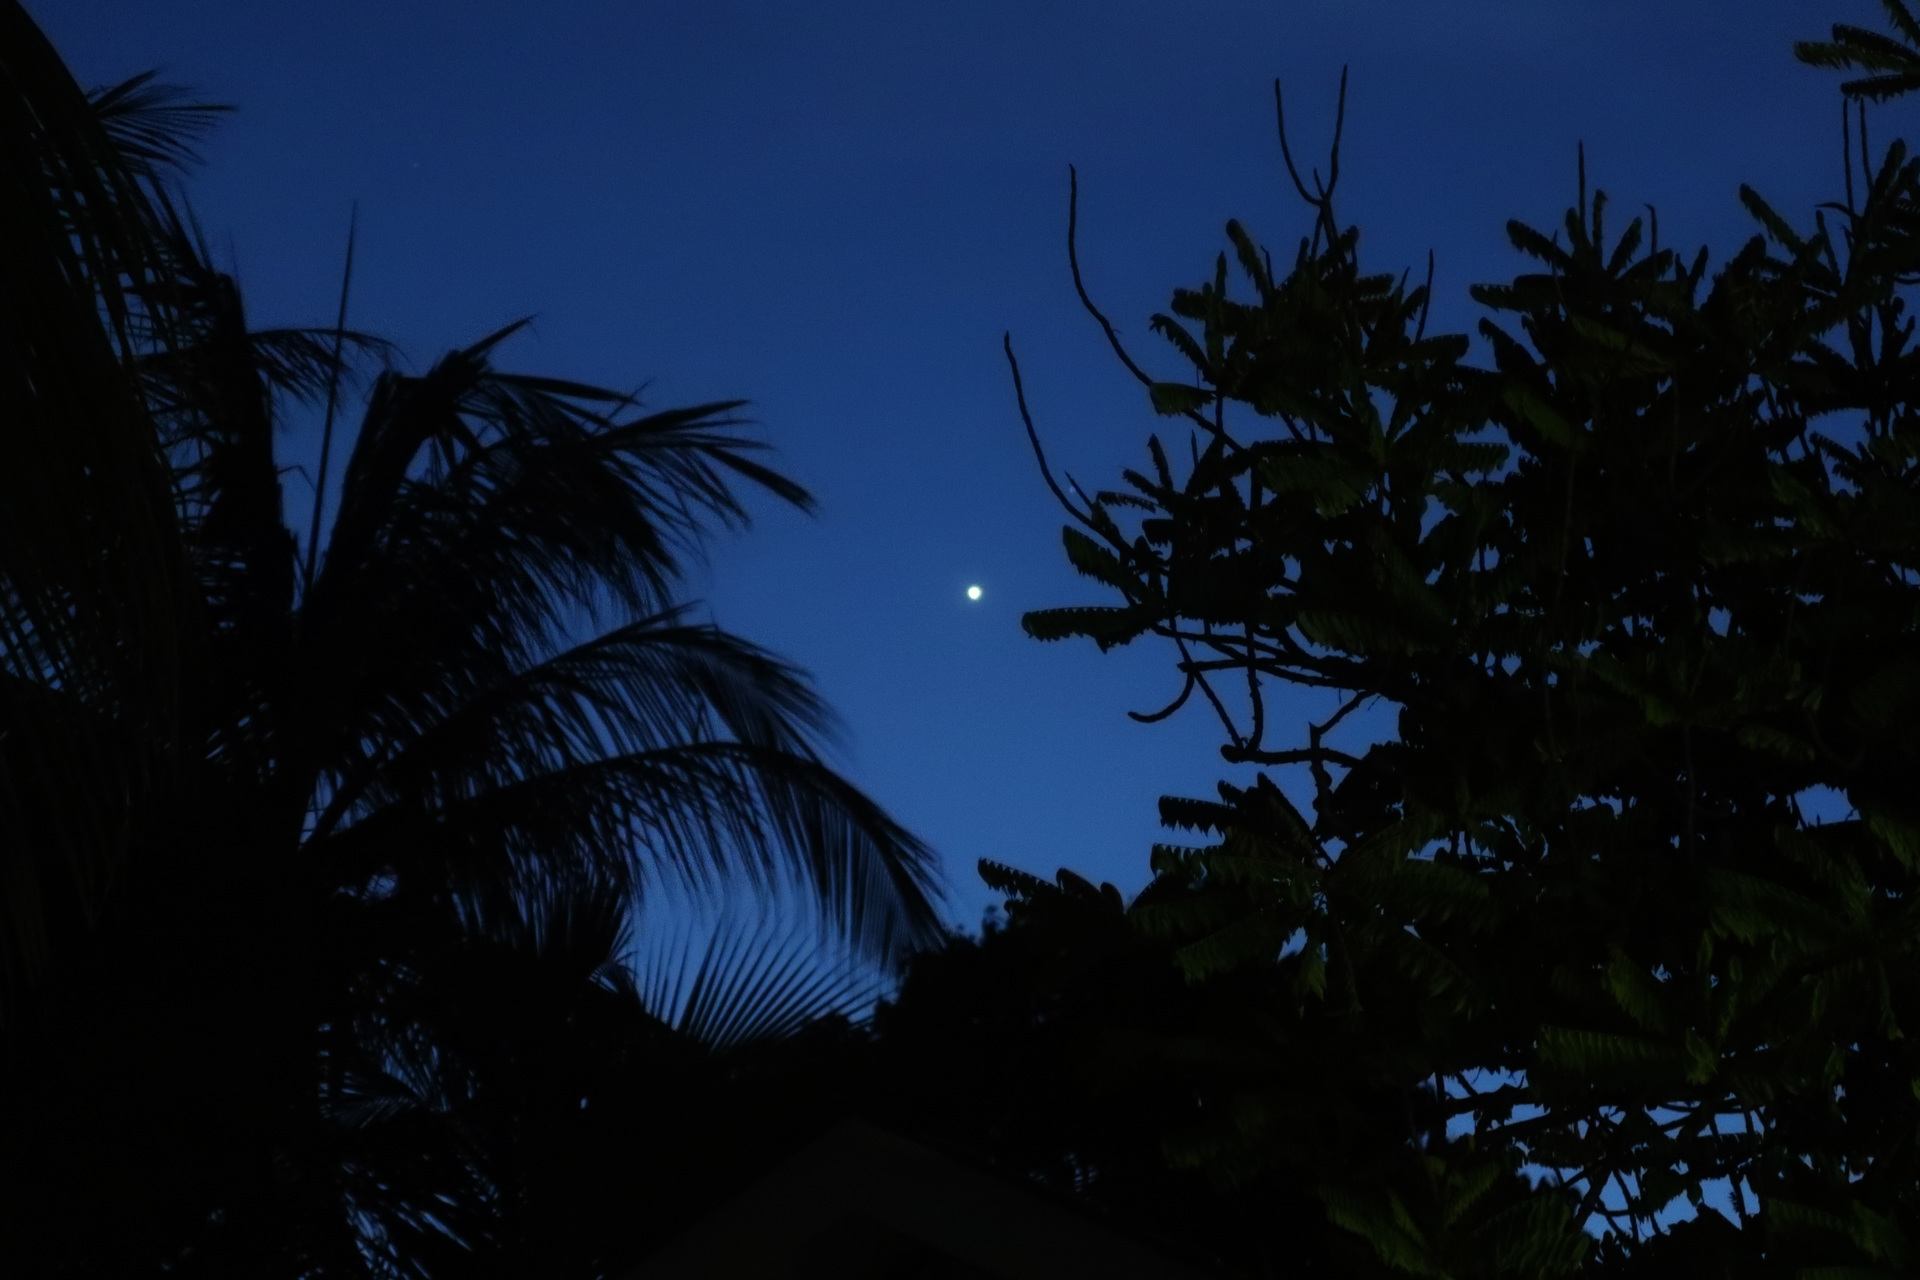 Venus 宵の明星 金星は今 マイナス4等星 もはや小型の月ぐらいの明るさ 紅海だより 南の島のリゾート暮らし マレーシア編